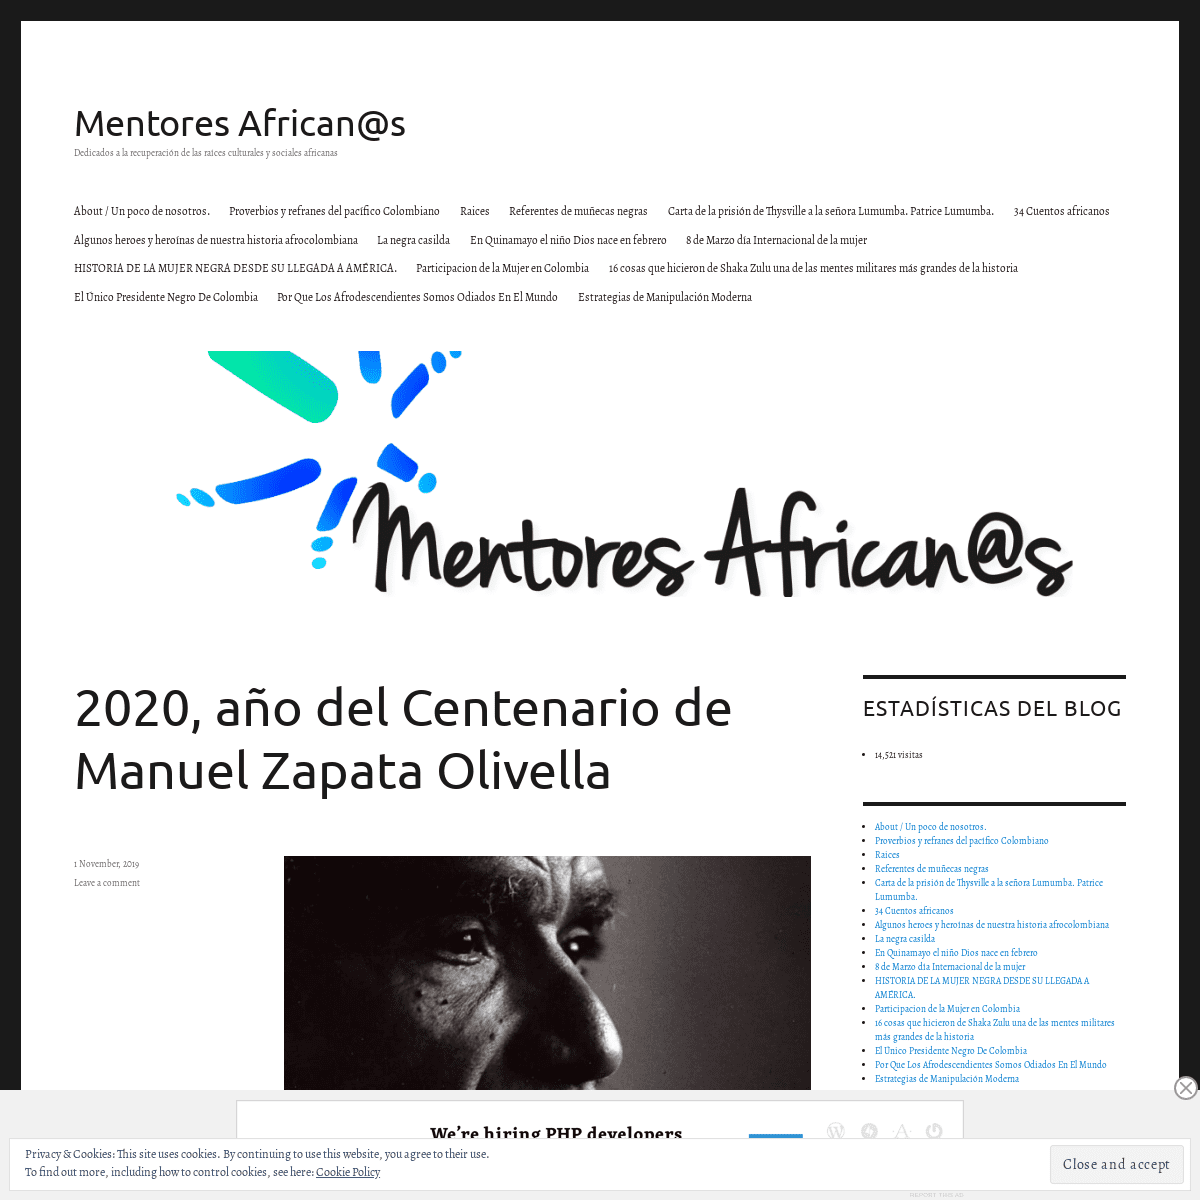 A complete backup of mentoresafricanos.wordpress.com